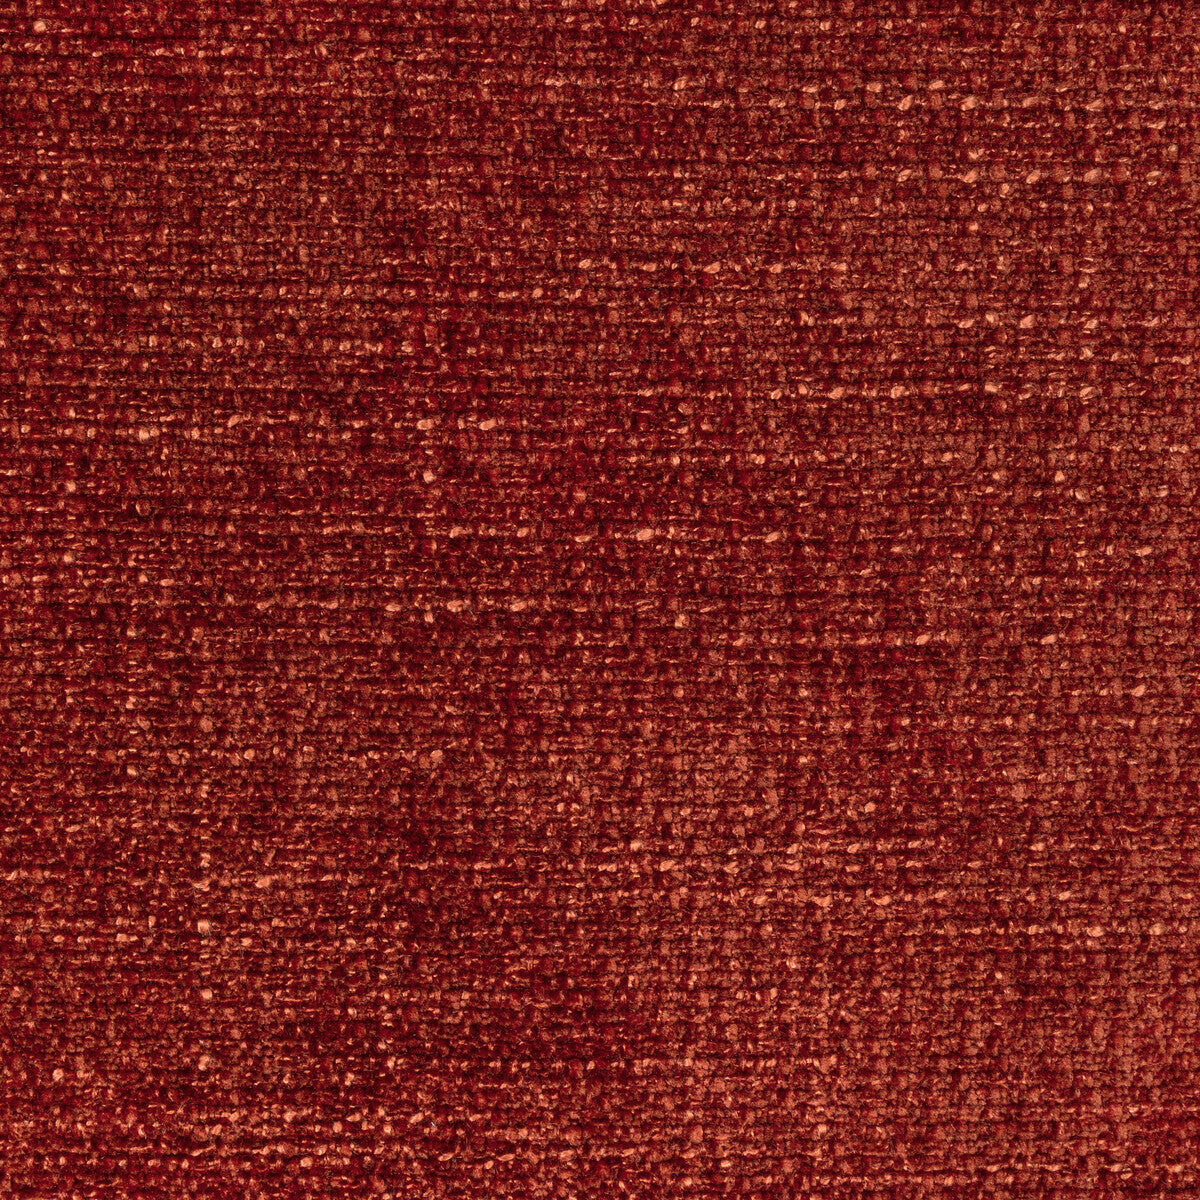 Kravet Smart fabric in 36578-619 color - pattern 36578.619.0 - by Kravet Smart in the Performance Kravetarmor collection